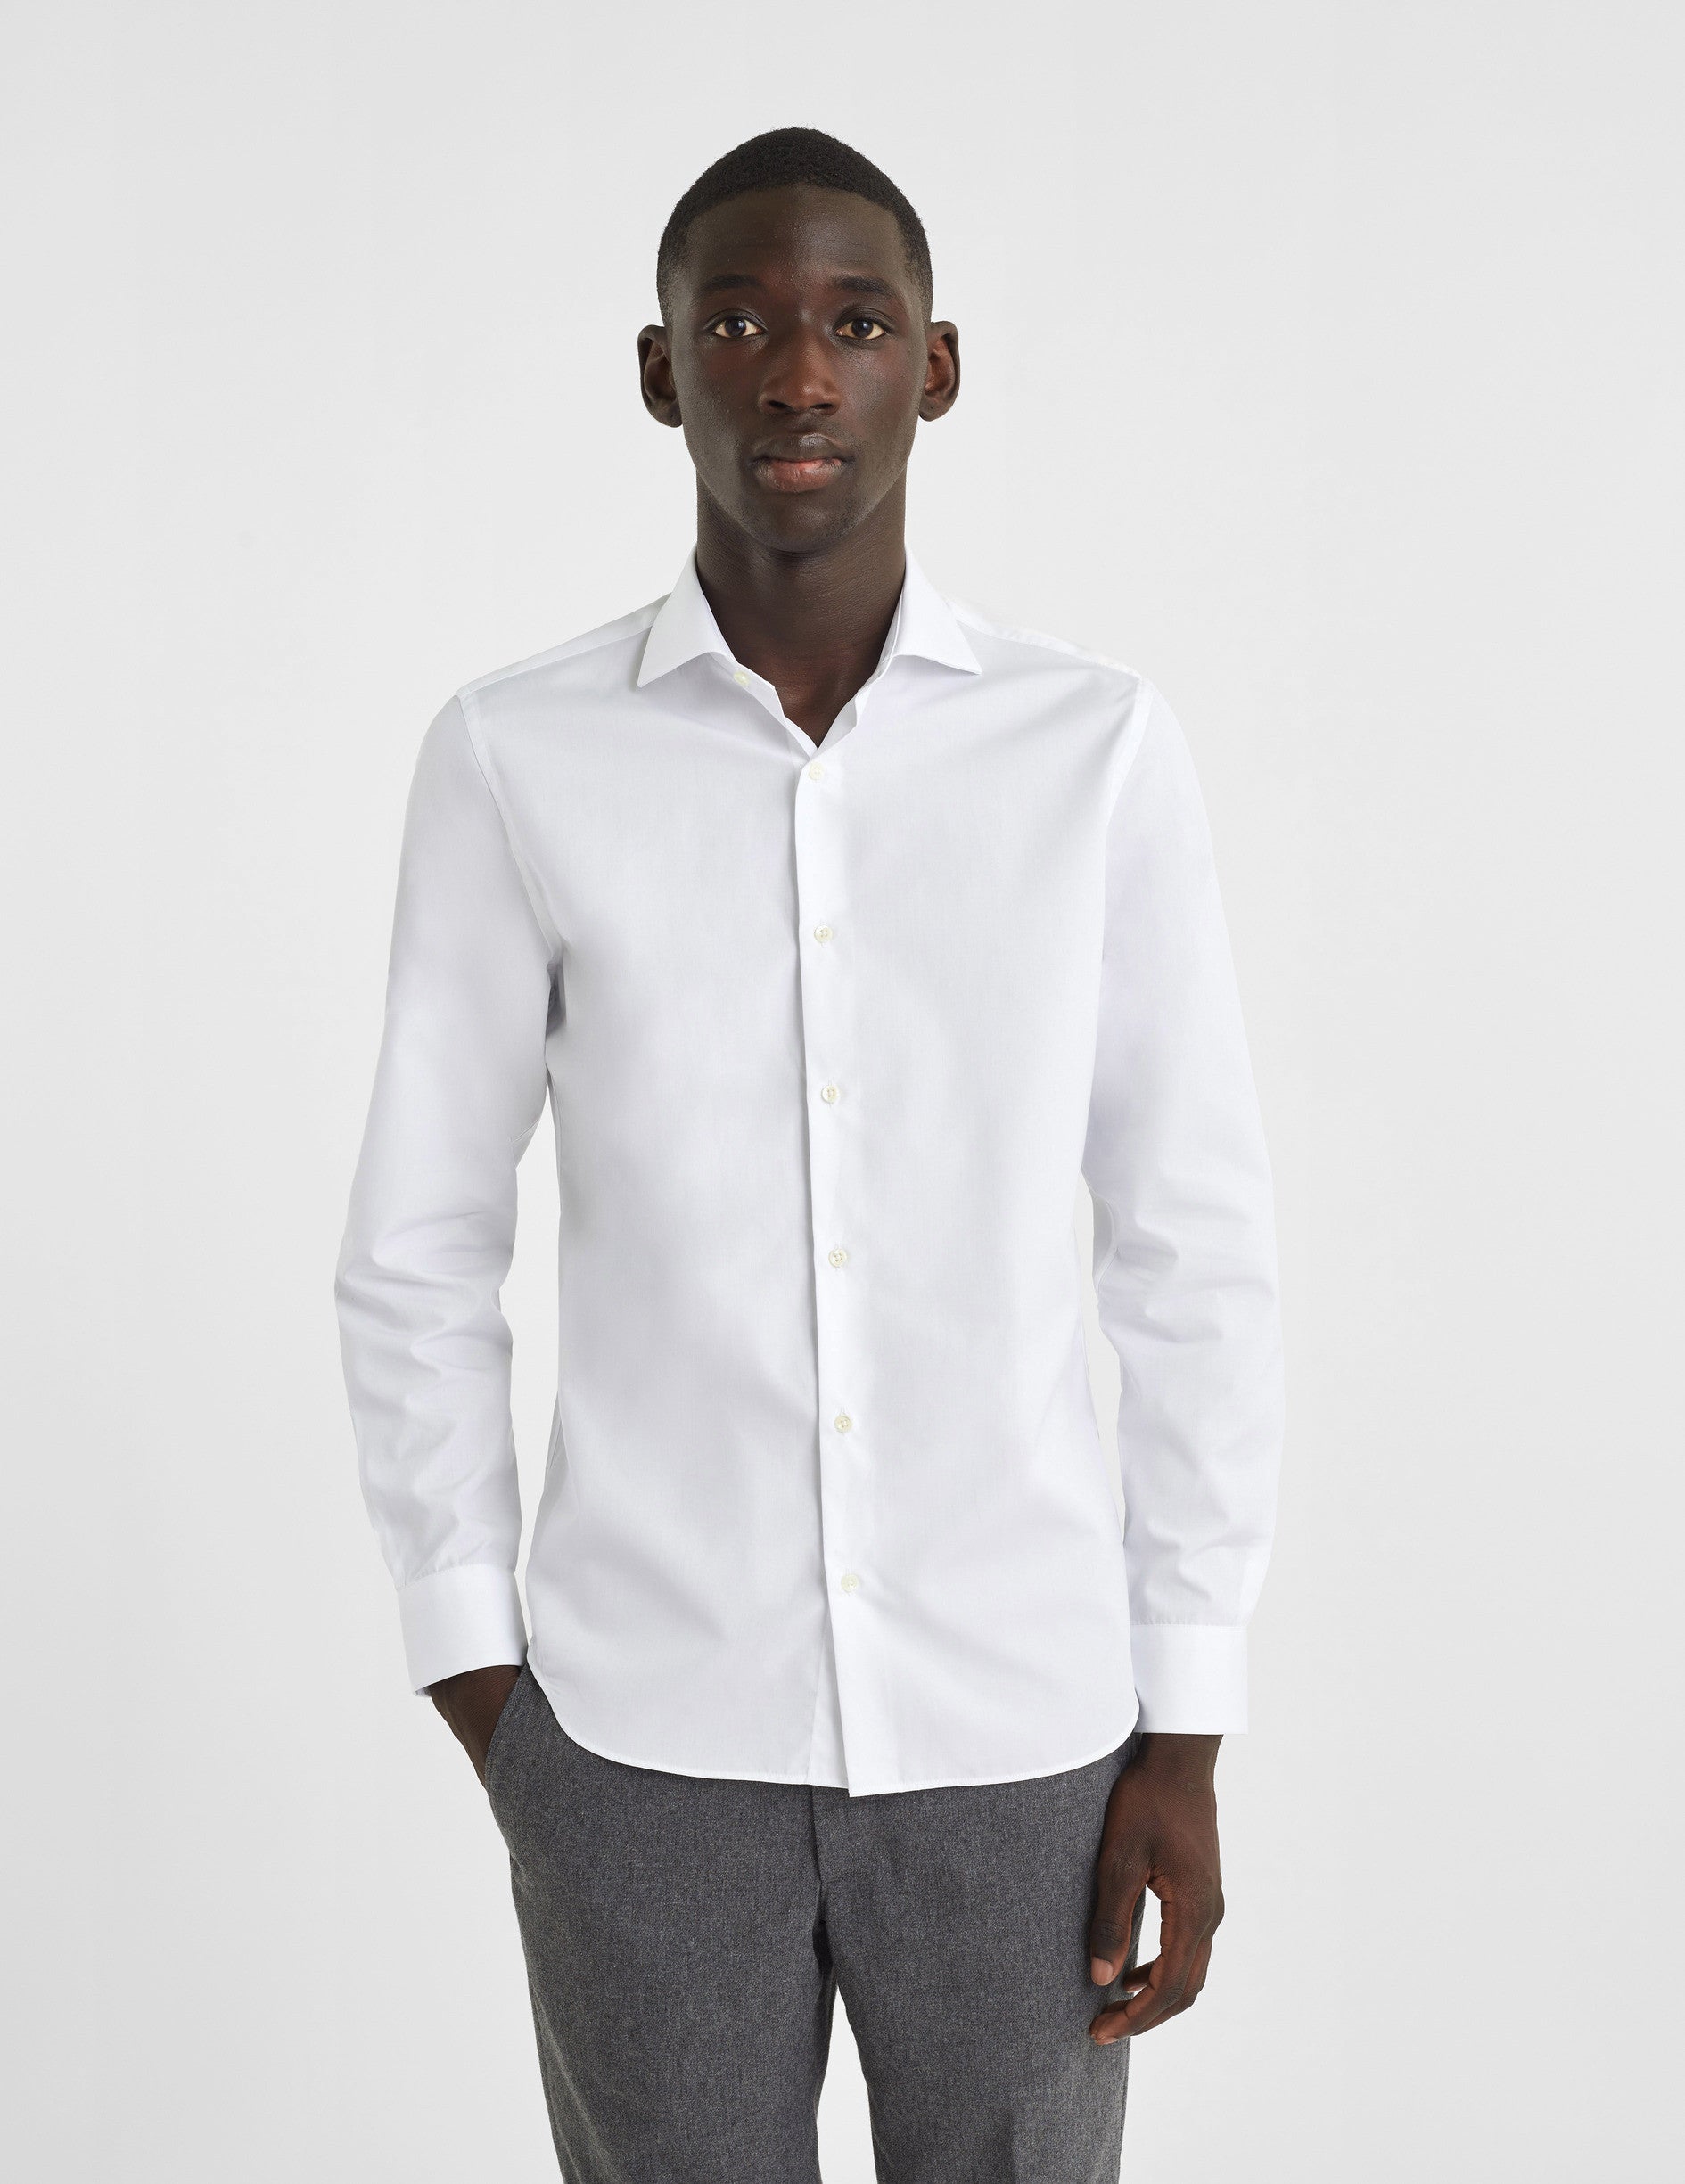 Fitted white shirt - Poplin - Italian Collar